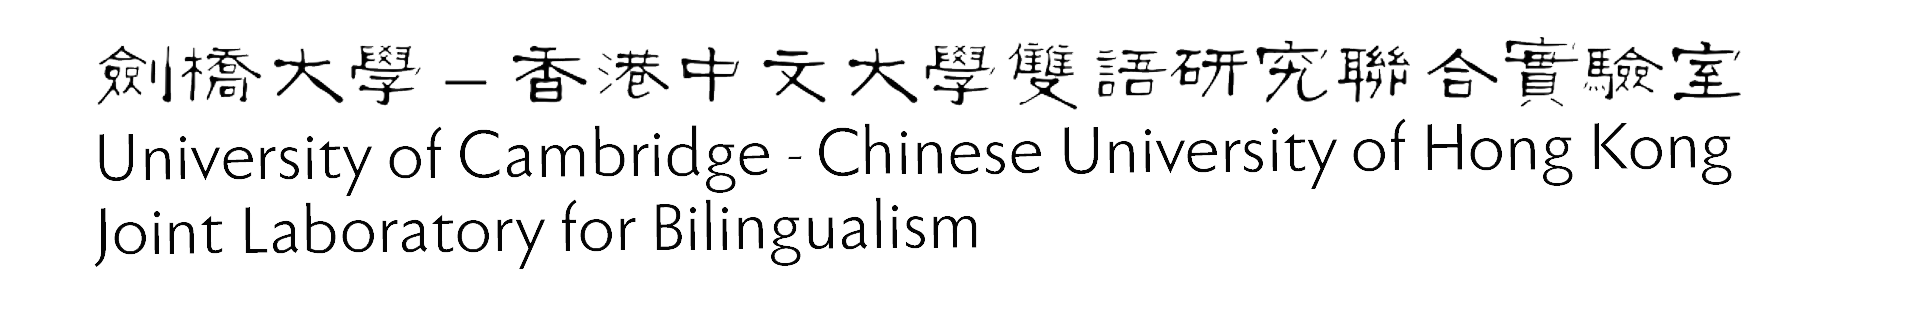 University of Cambridge - Chinese University of Hong Kong, Joint Laboratory for Bilingualism